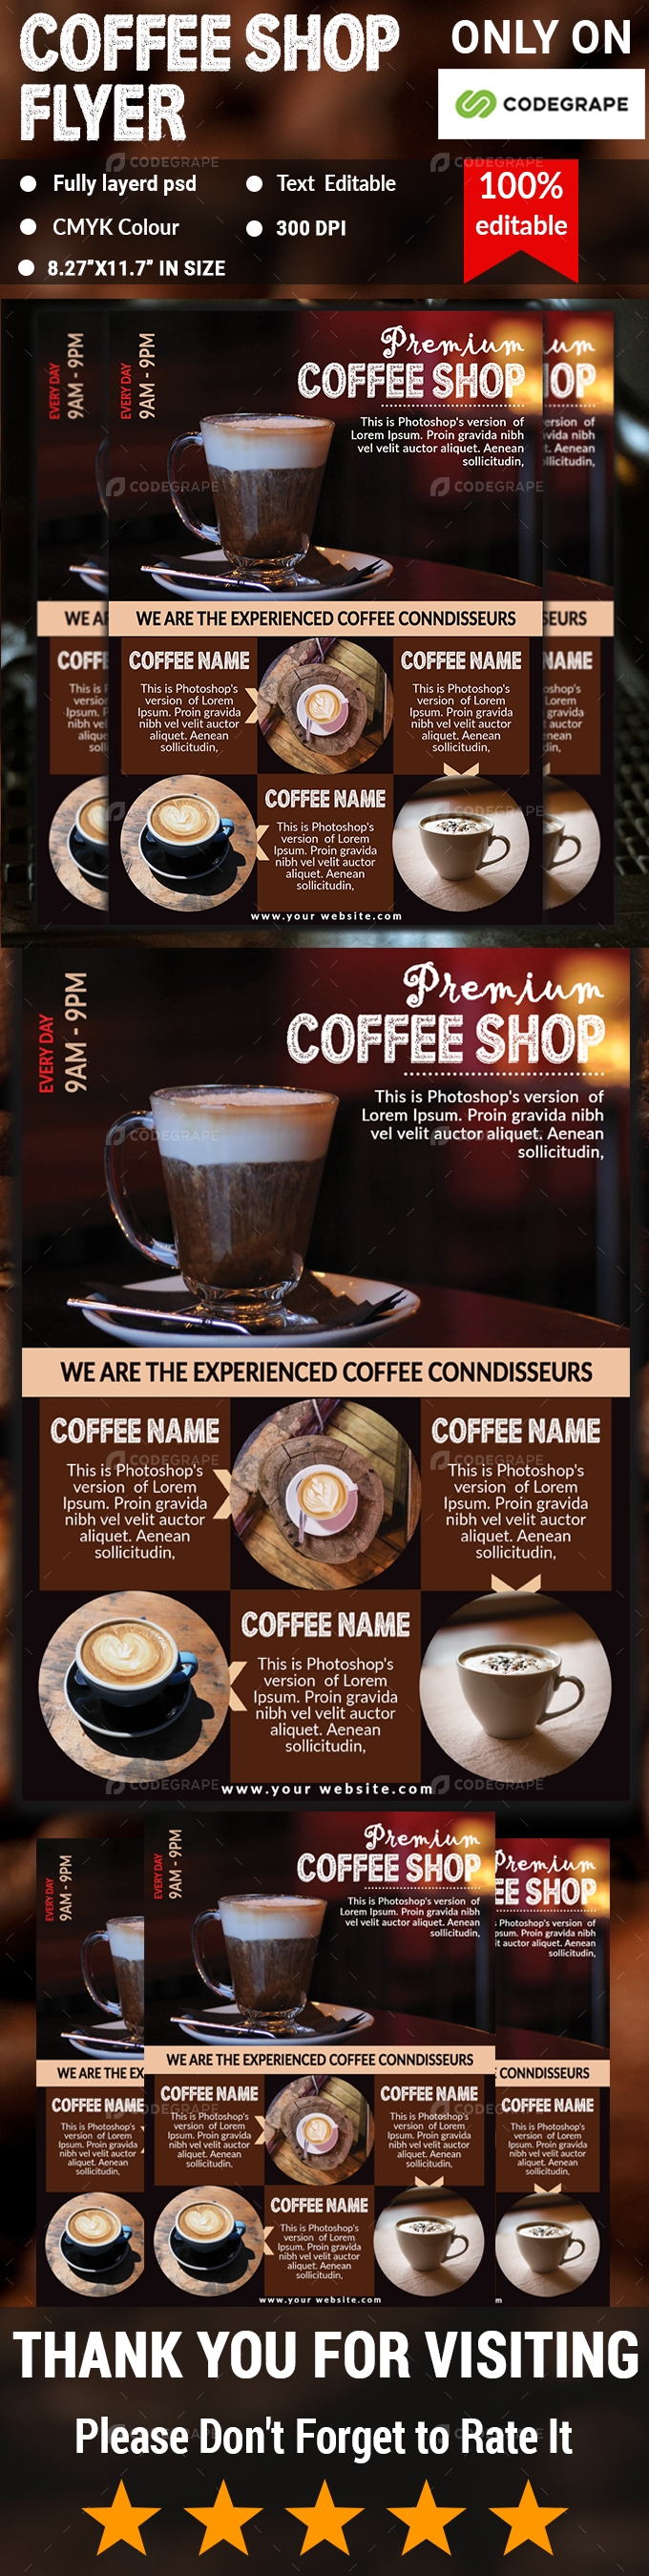 Coffee Shop Flyer